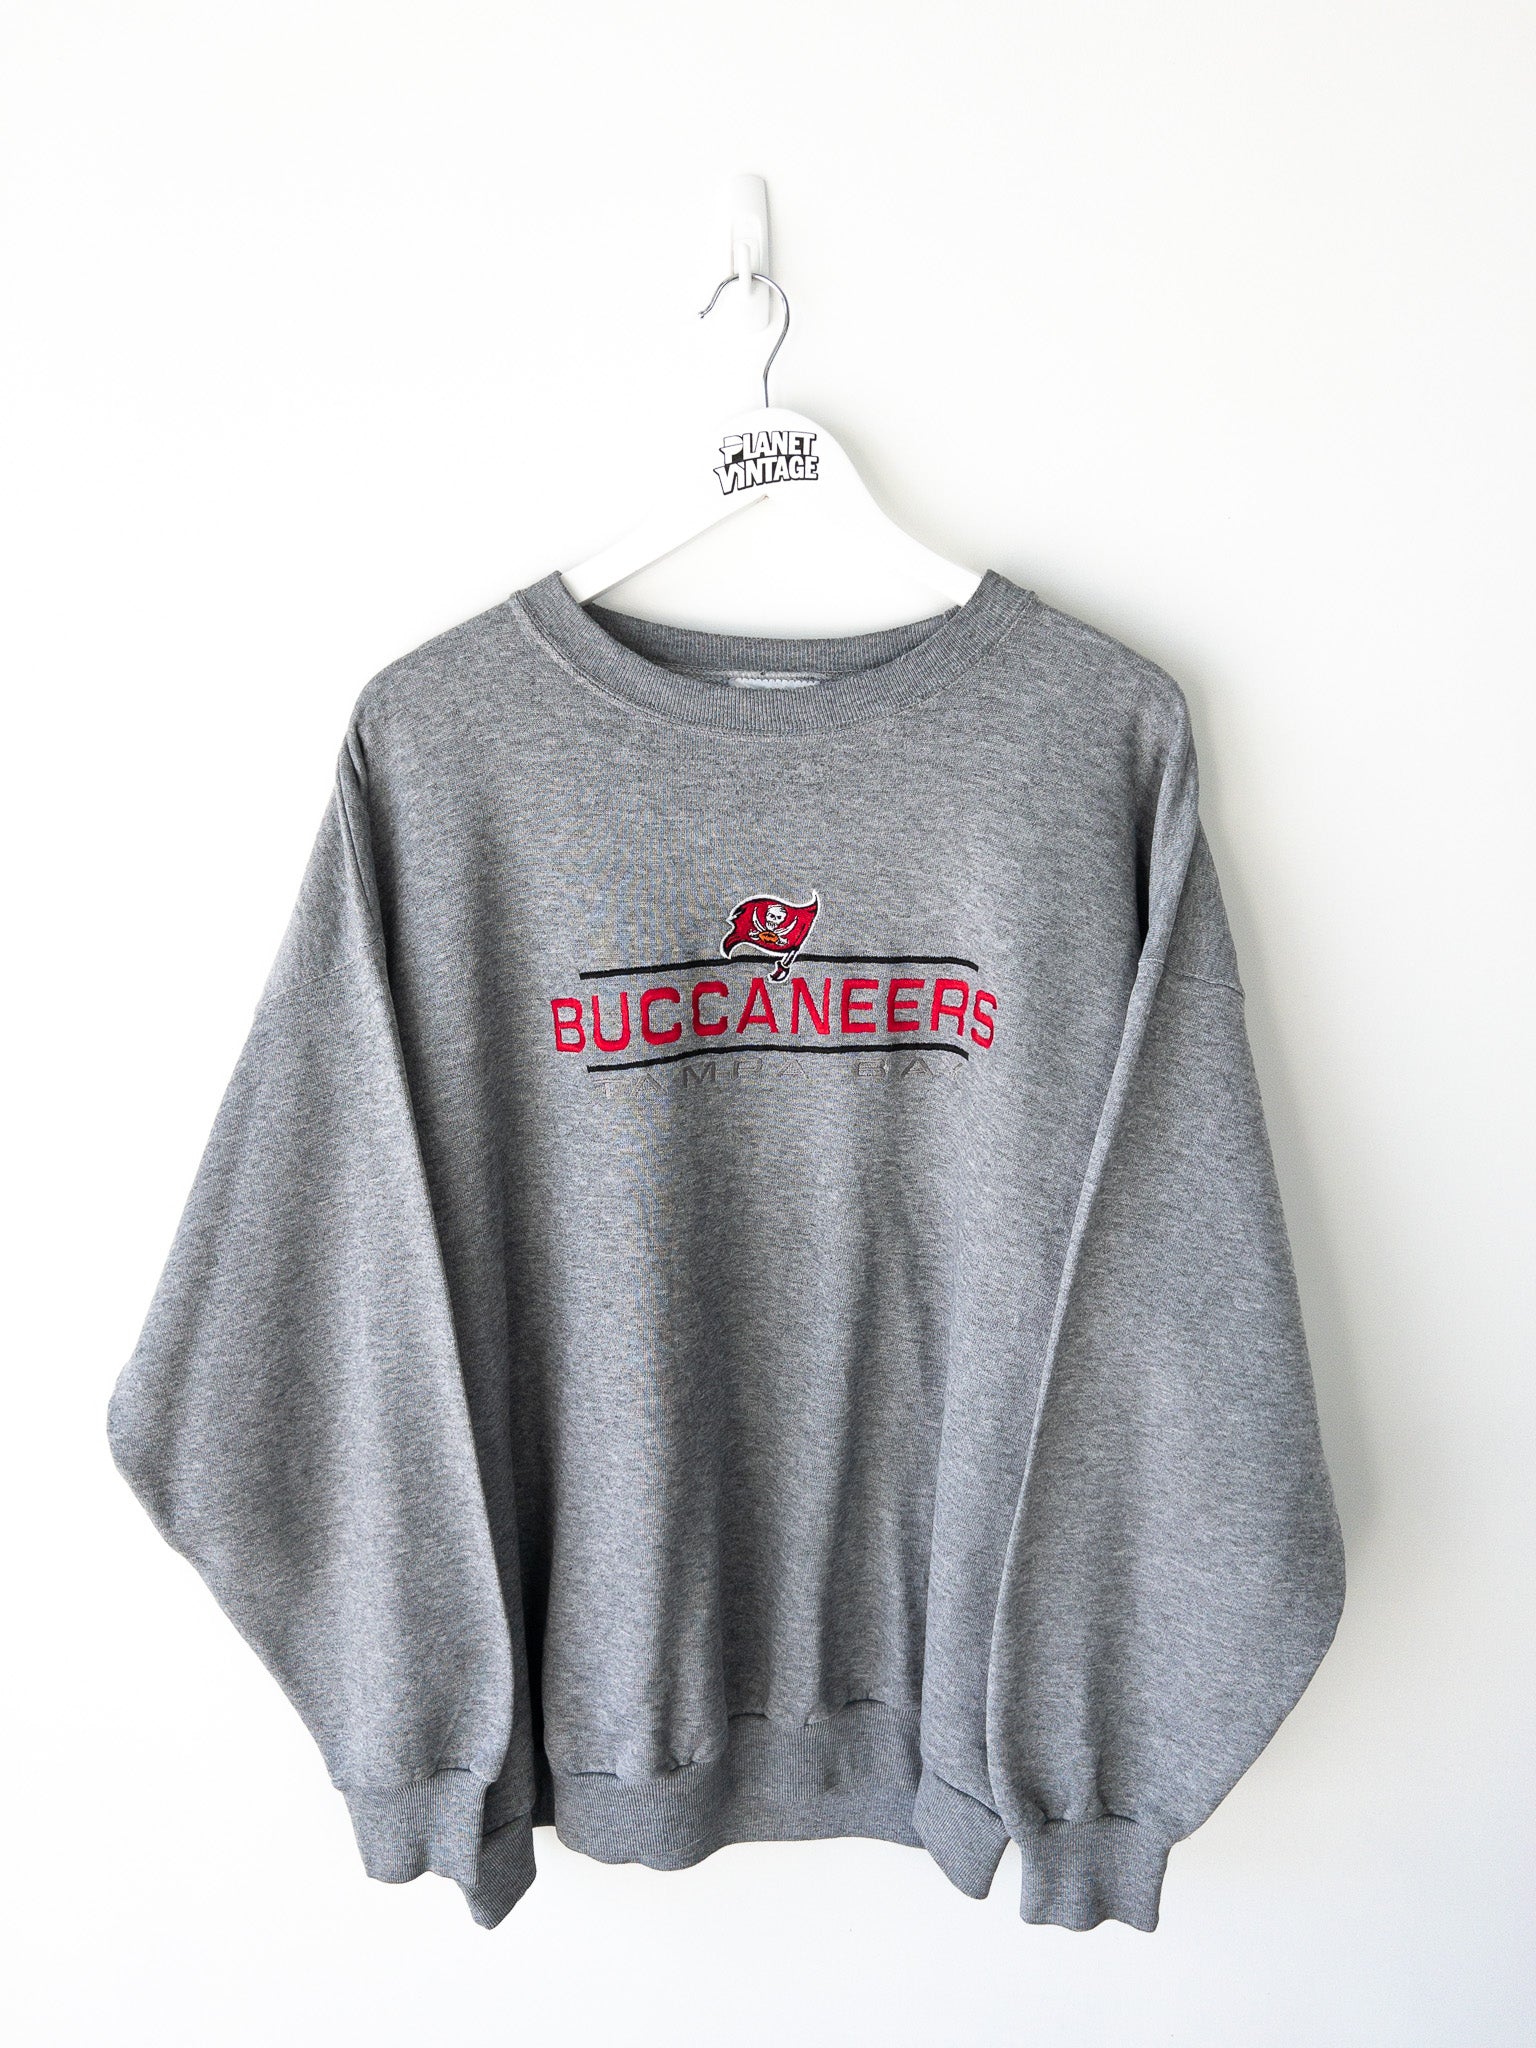 Vintage Tampa Bay Buccaneers Sweatshirt (XL)